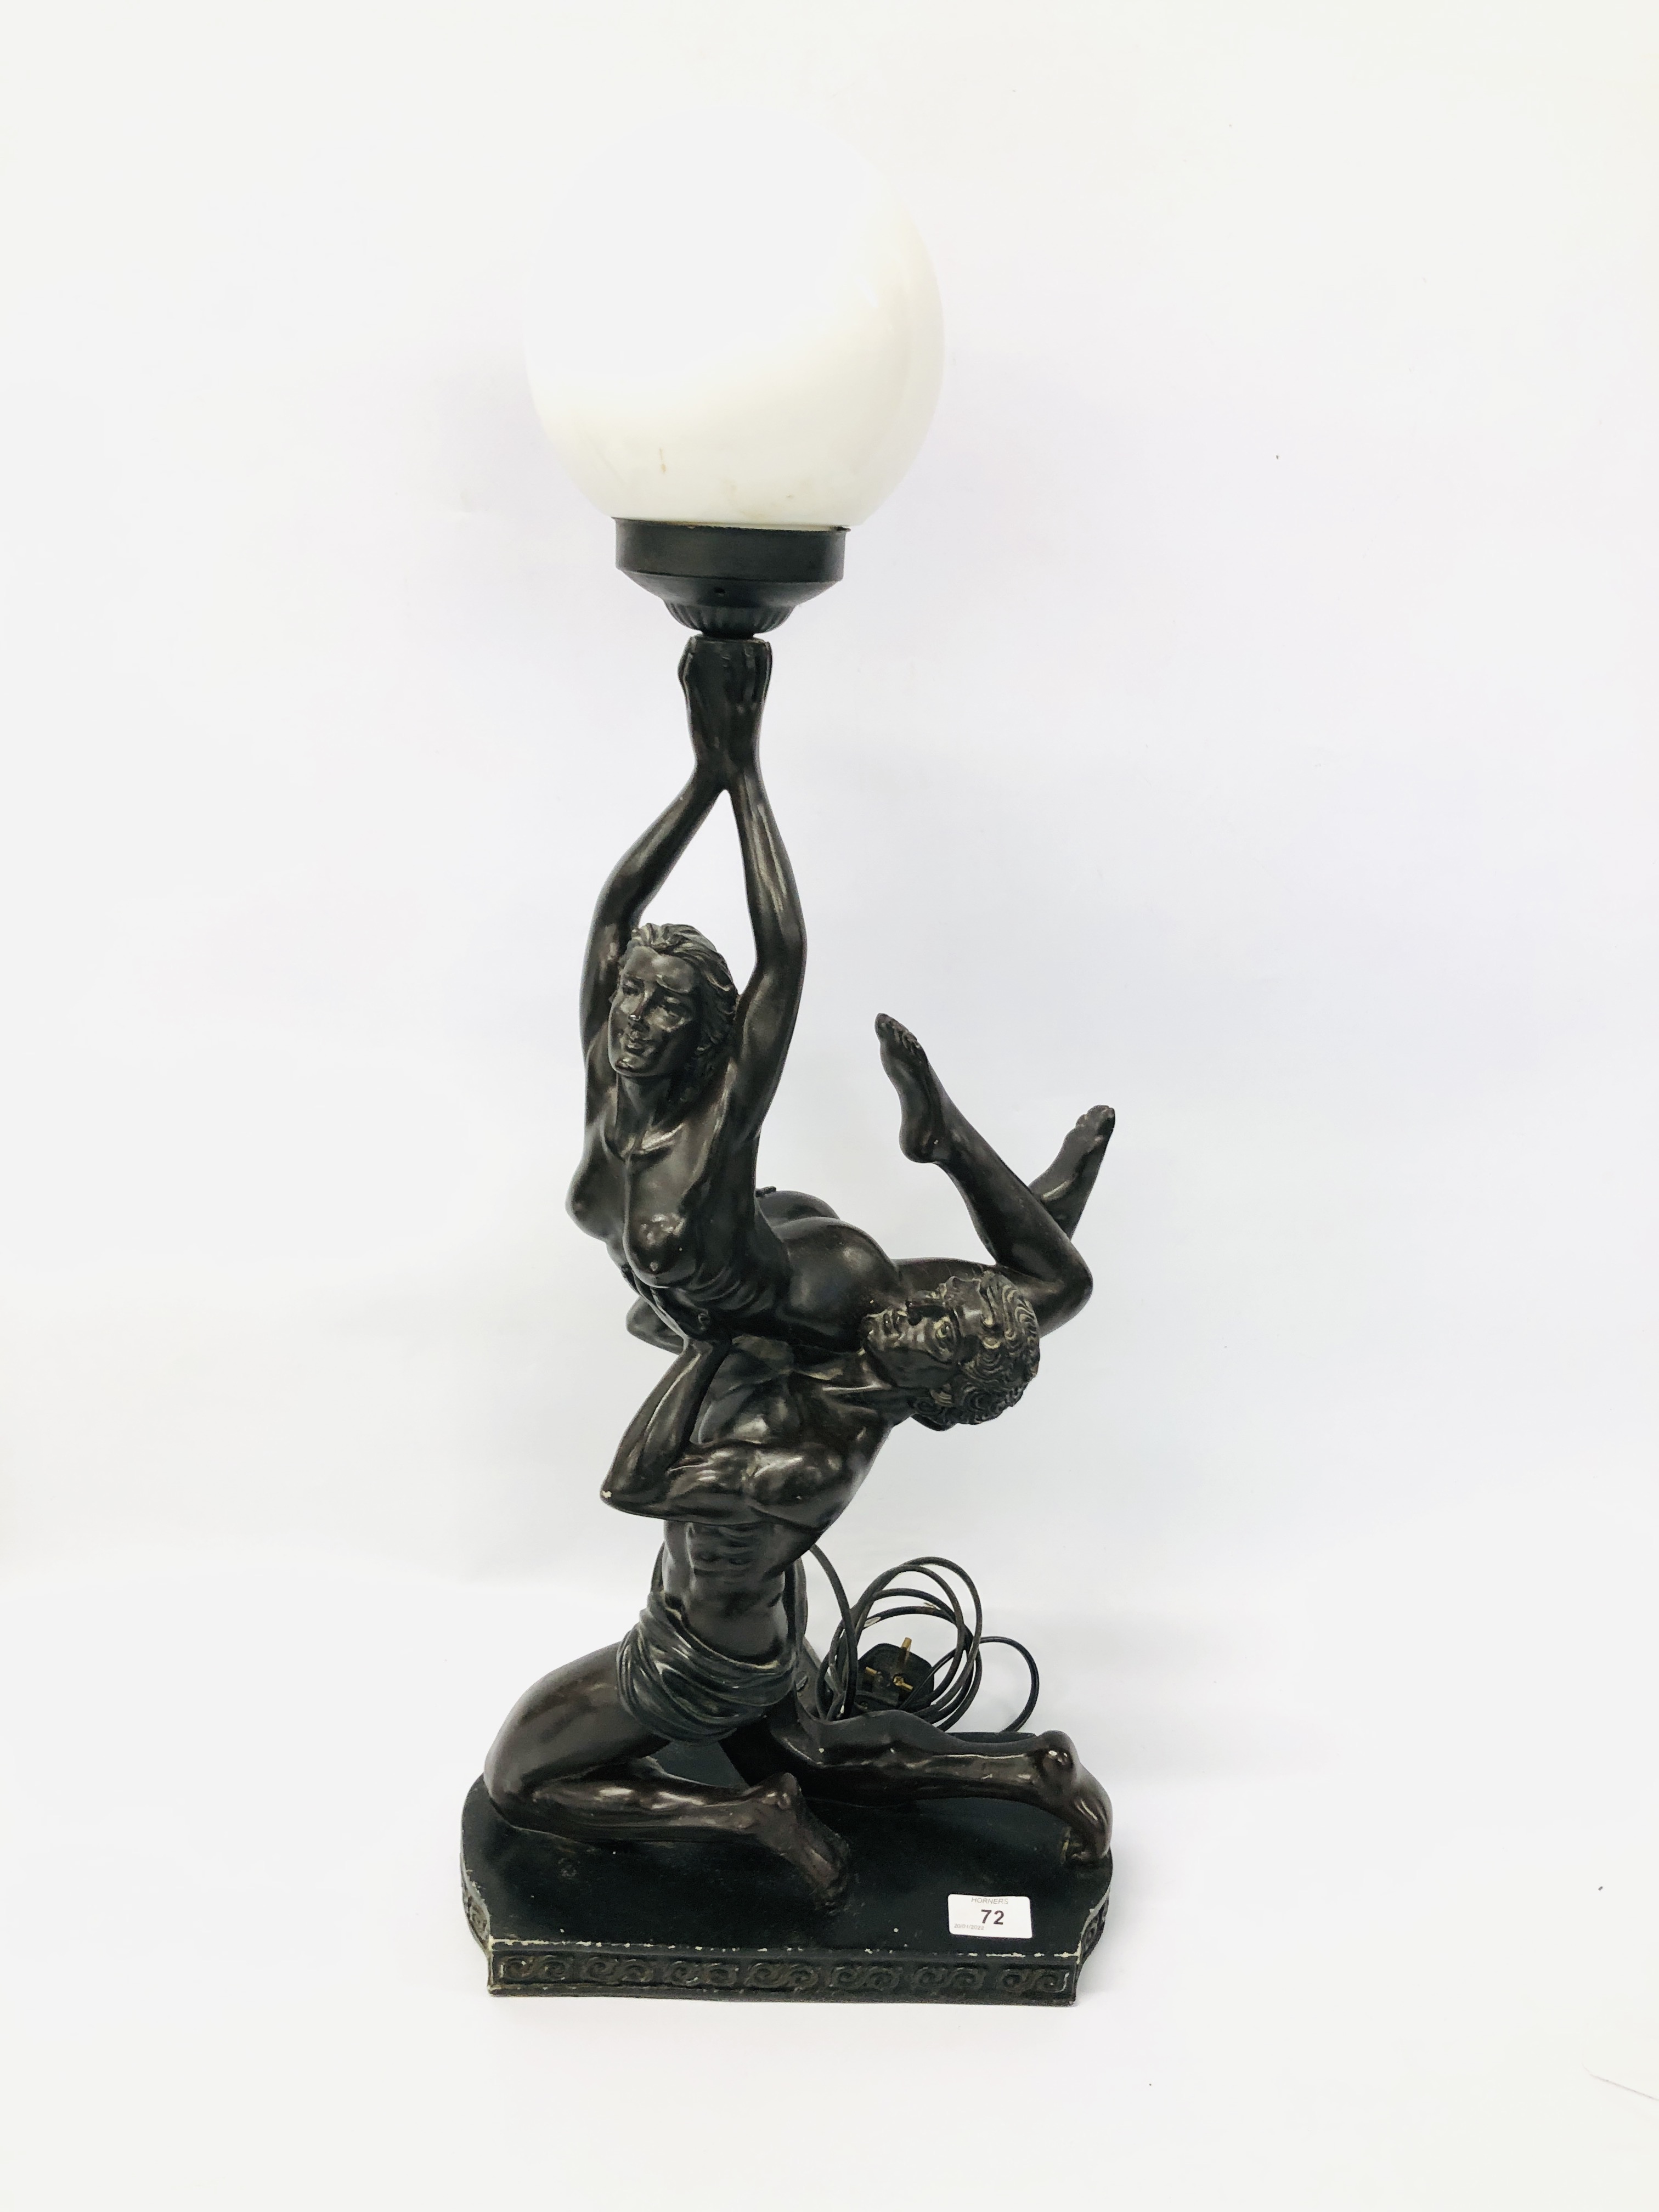 A MODERN ART DECO STYLE LAMP NUDE COUPLE,